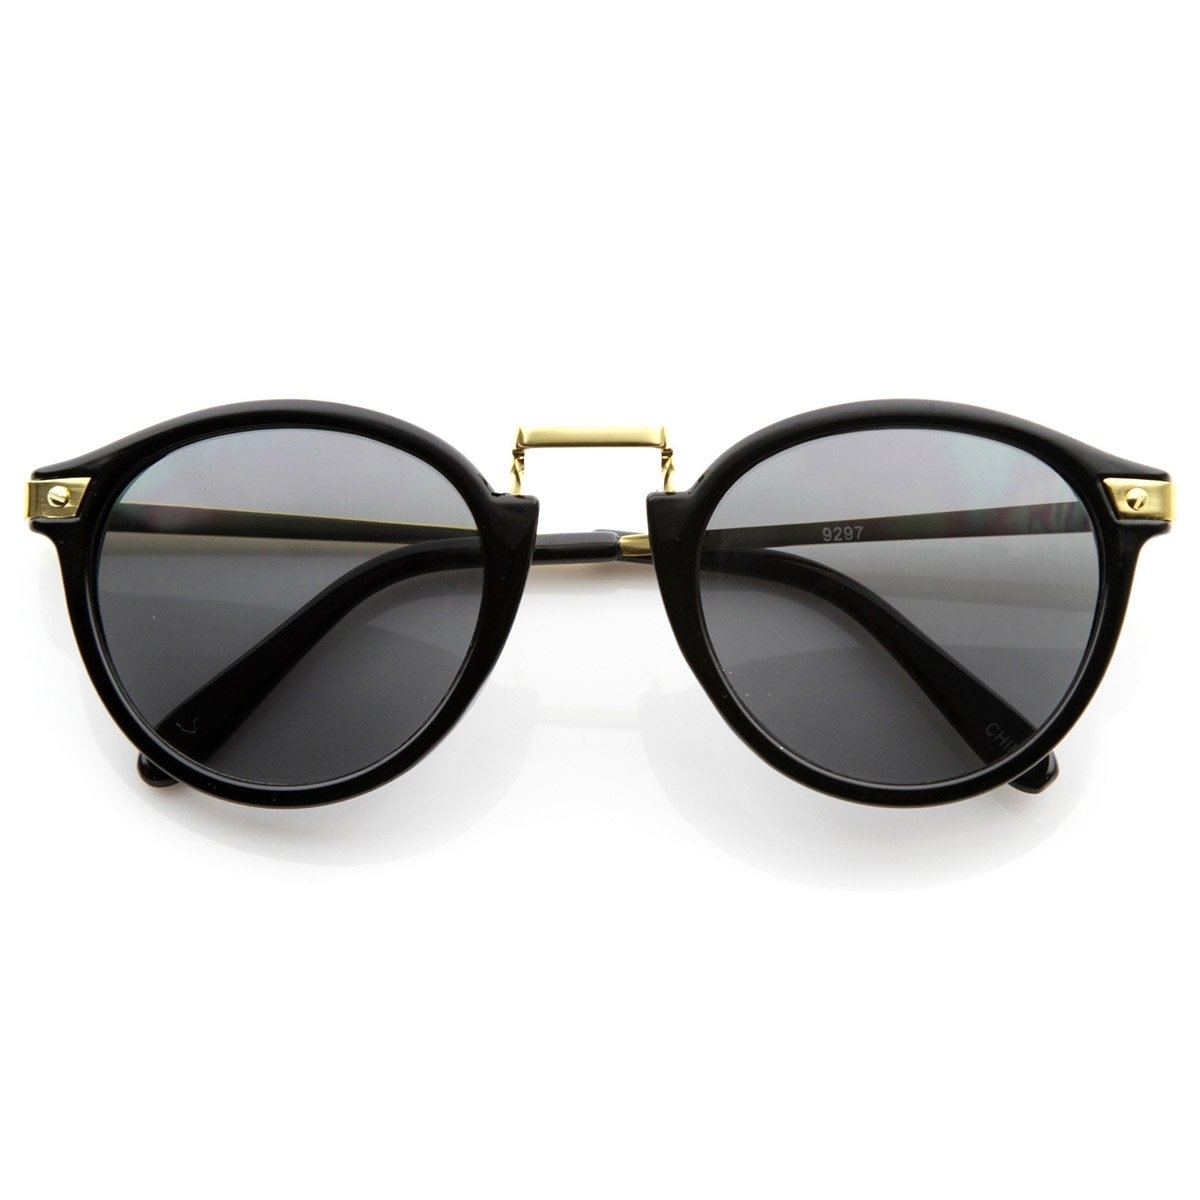 Vintage Inspired Round Horned Rim P-3 Frame Retro Sunglasses - Shiny Black-Gold